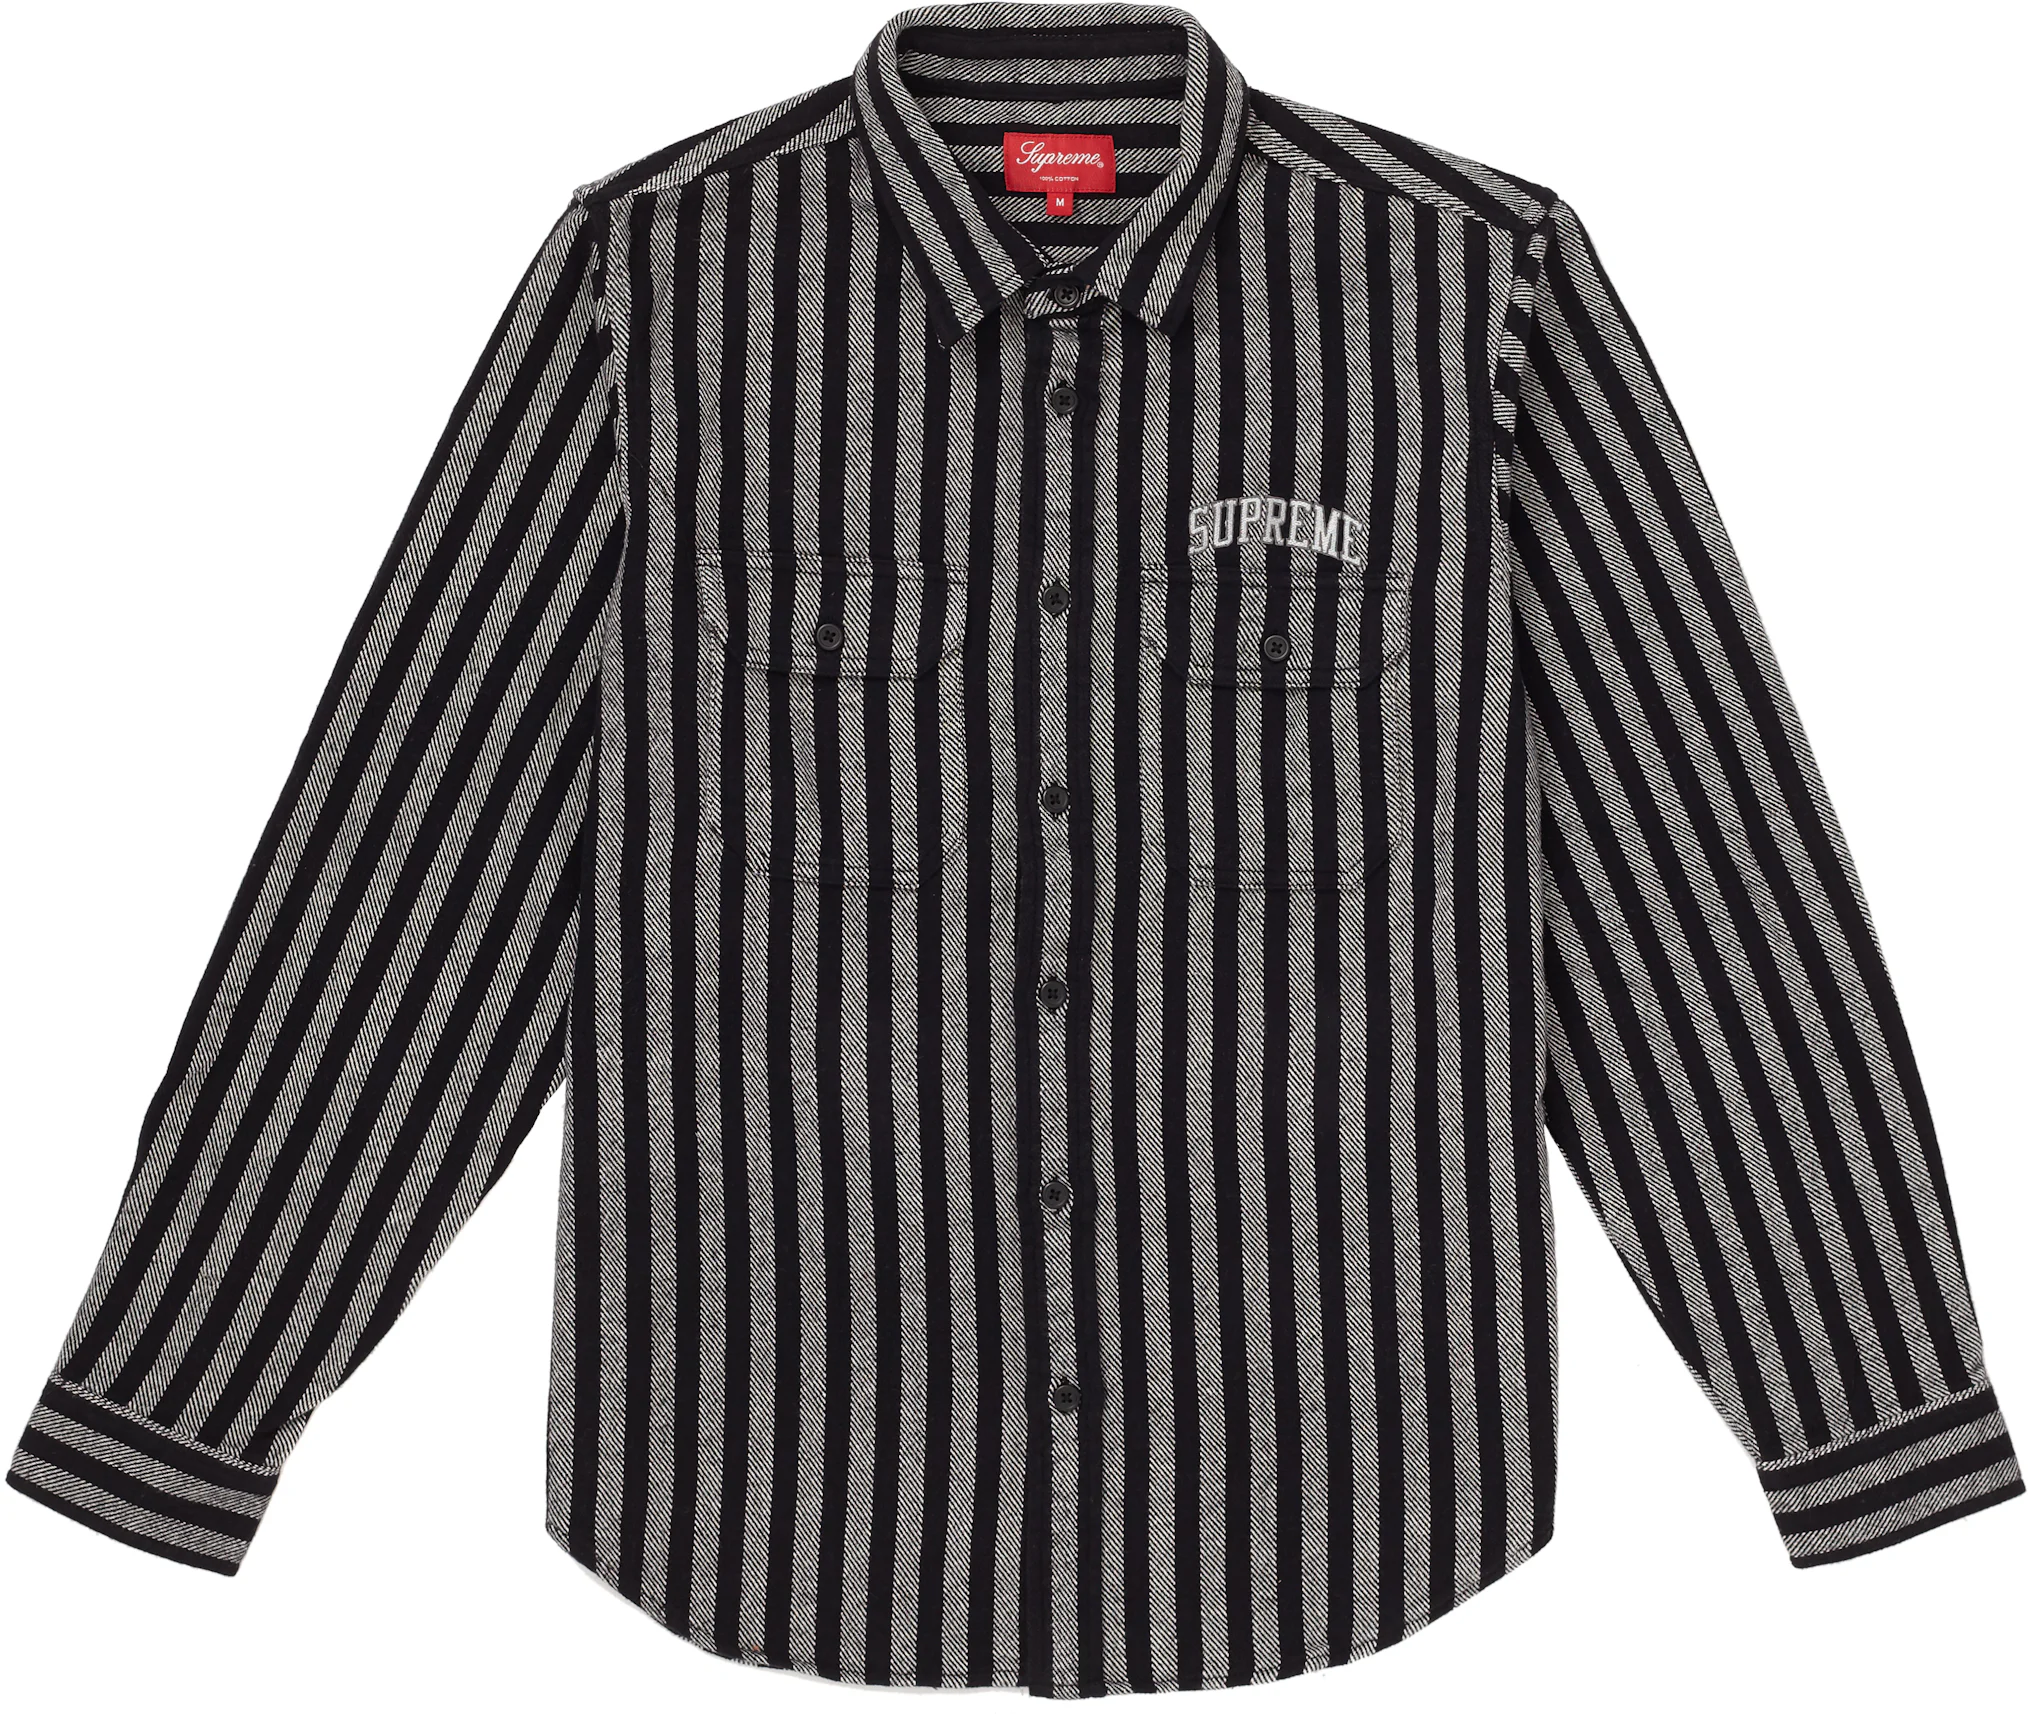 https://images.stockx.com/images/Supreme-Stripe-Heavyweight-Flannel-Shirt-Black.jpg?fit=fill&bg=FFFFFF&w=1200&h=857&fm=webp&auto=compress&dpr=2&trim=color&updated_at=1623271353&q=60